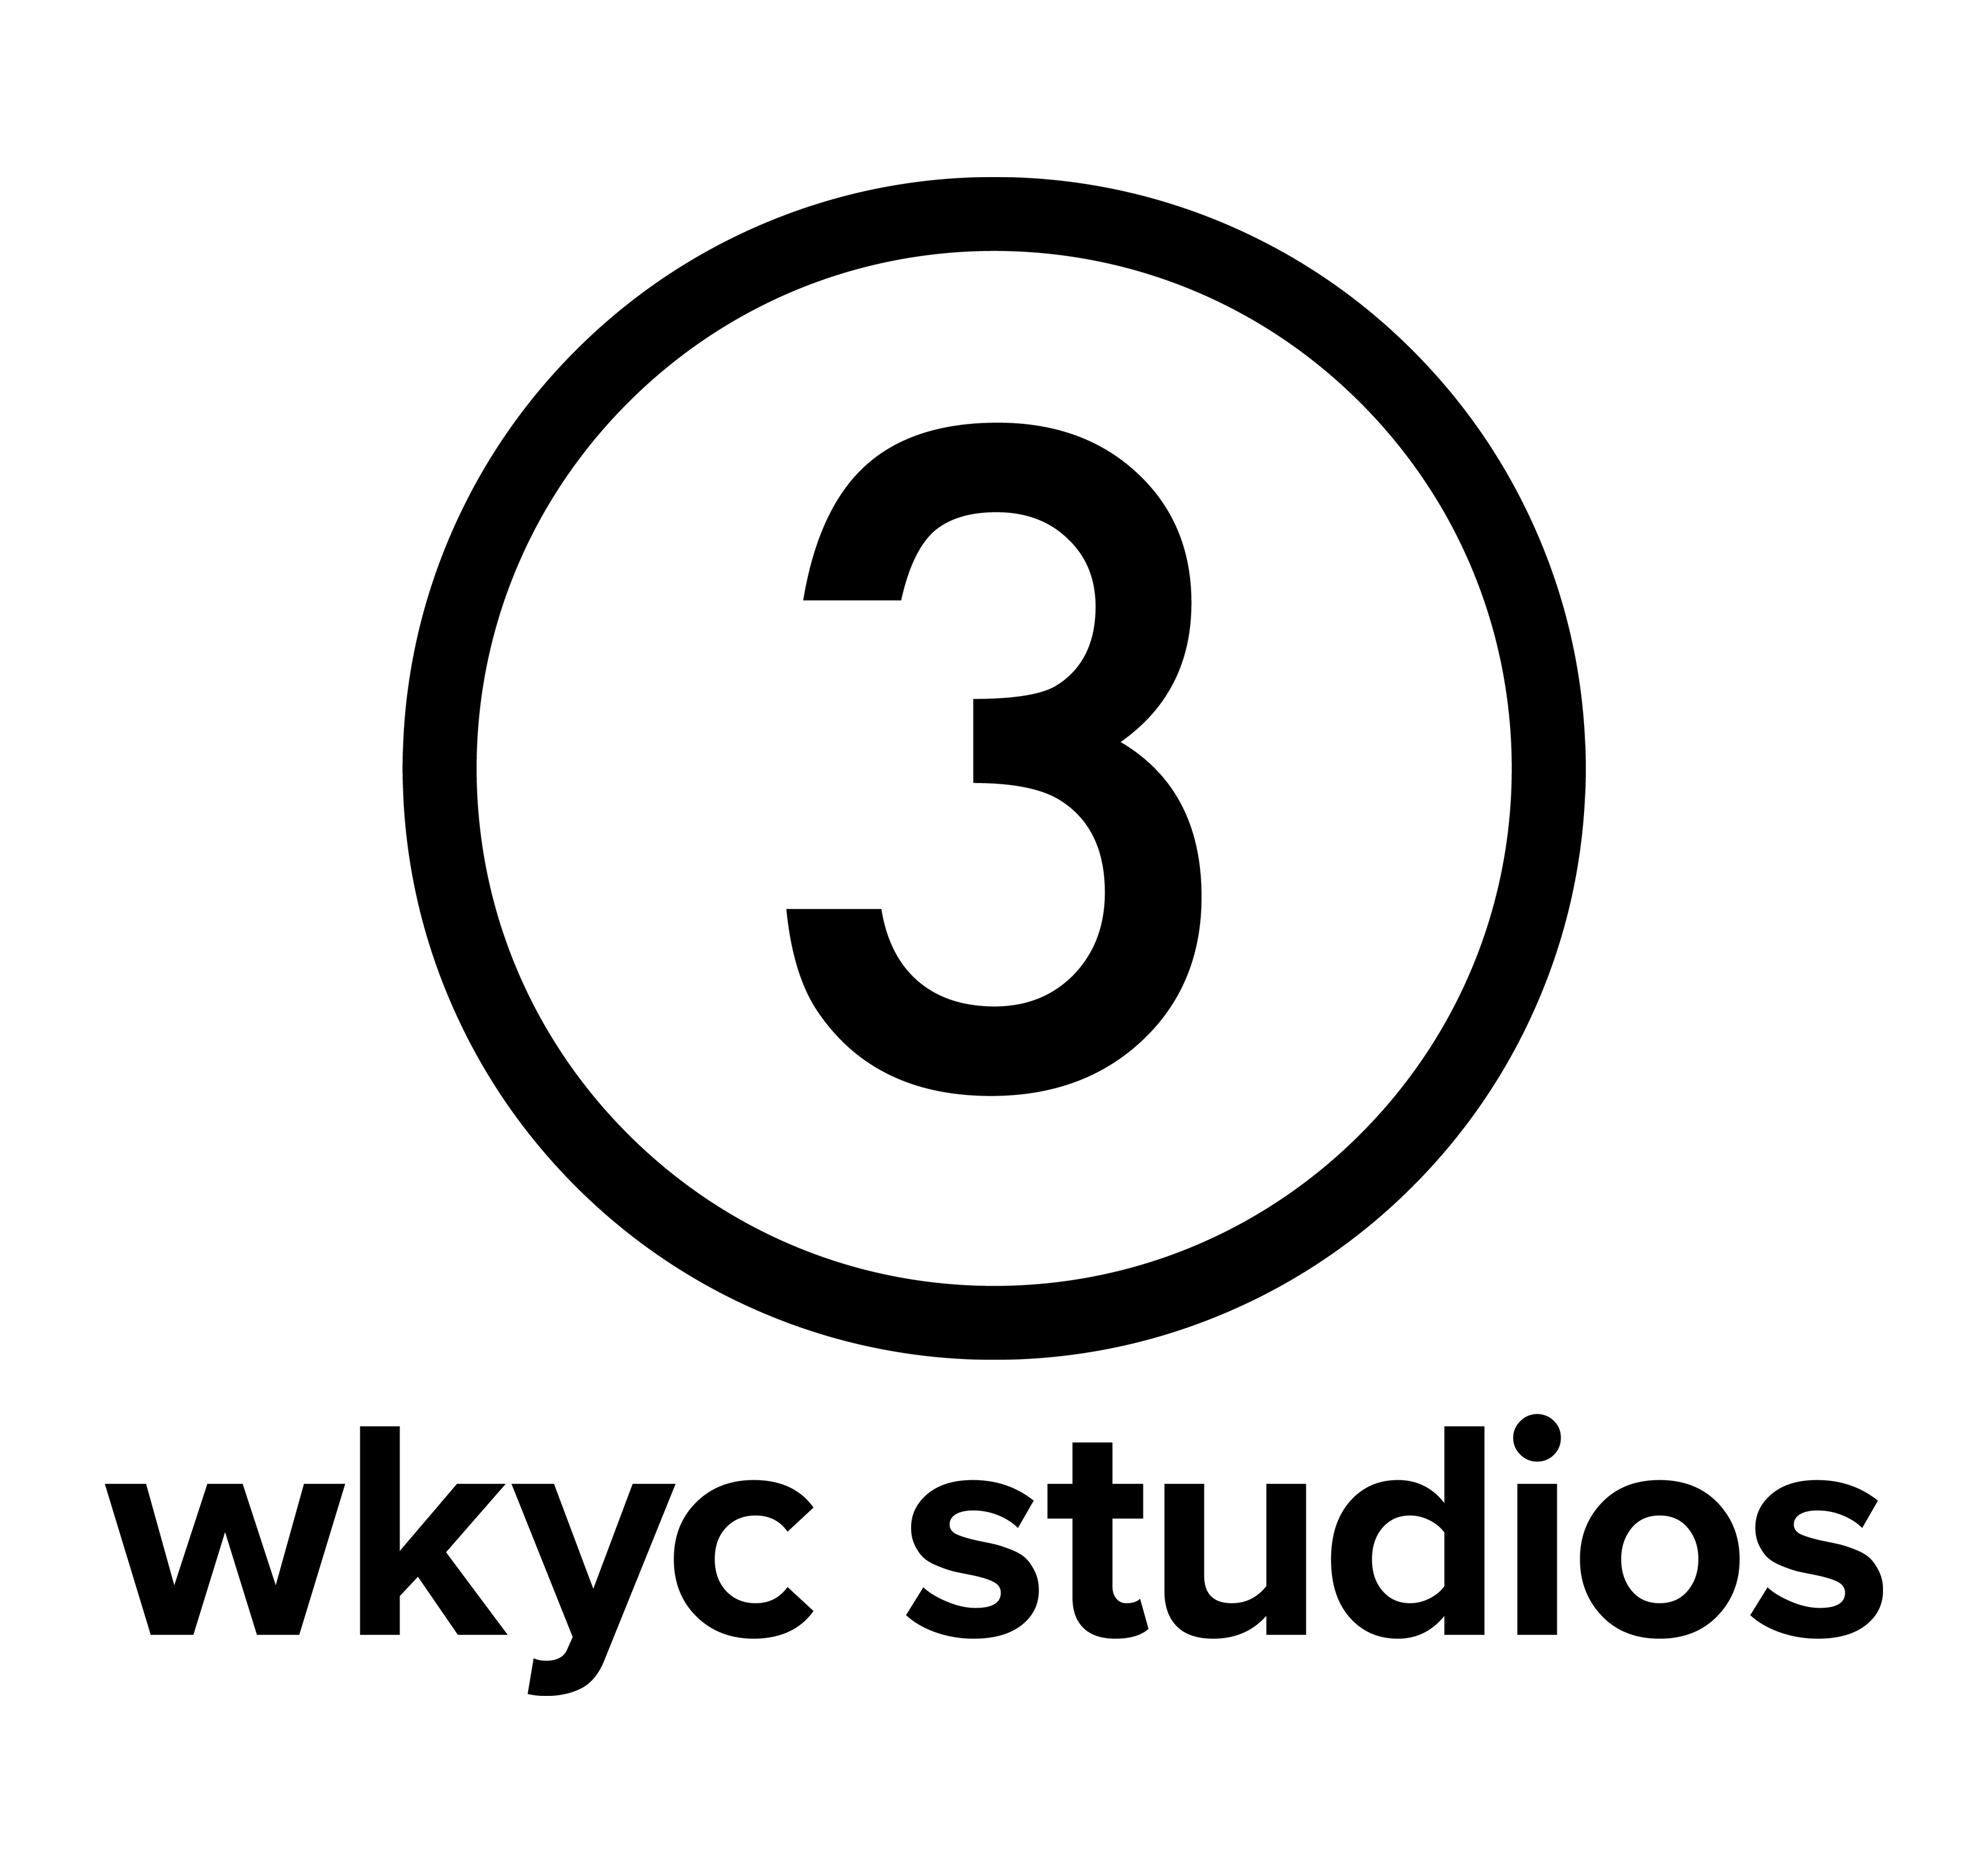 3 studios logo - Black